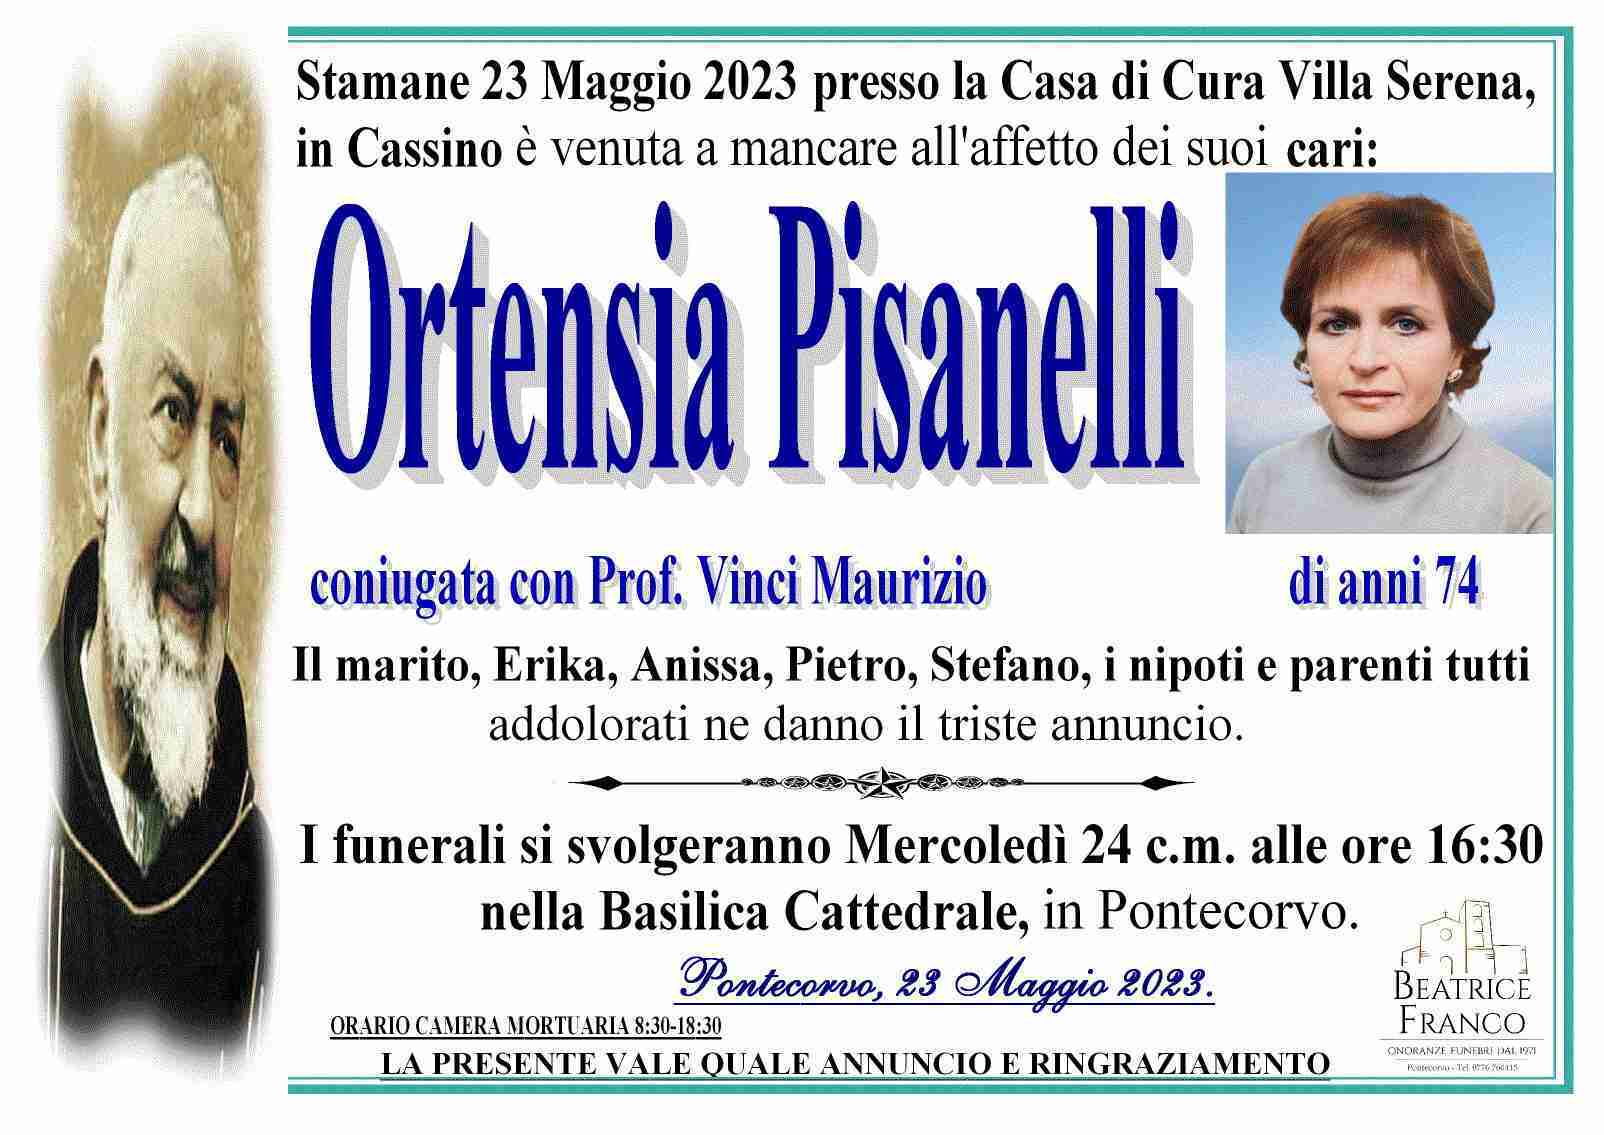 Ortensia Pisanelli